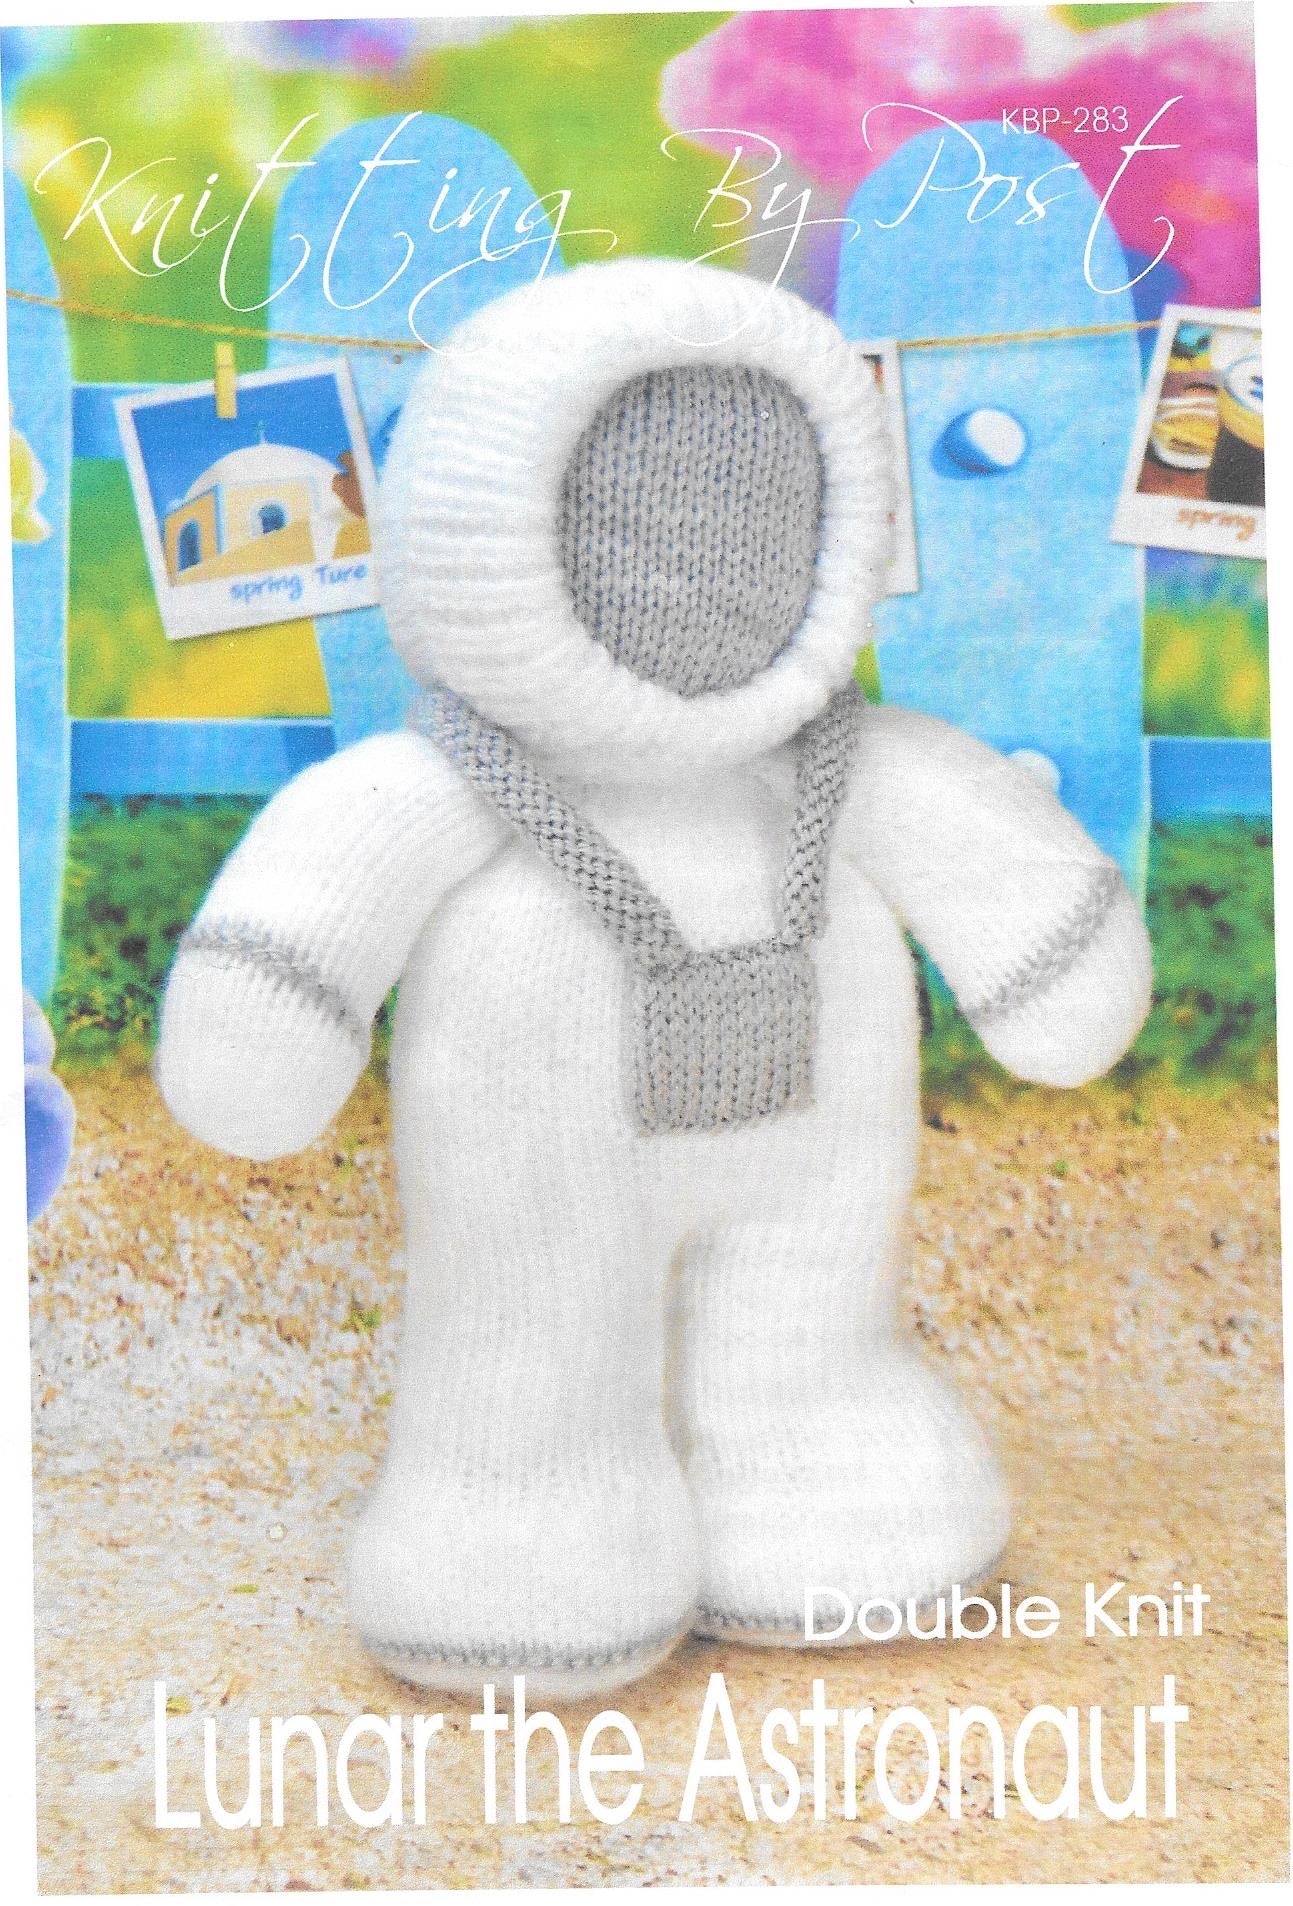 KBP-283 Knitting pattern Lunar the Astronaut toy in DK